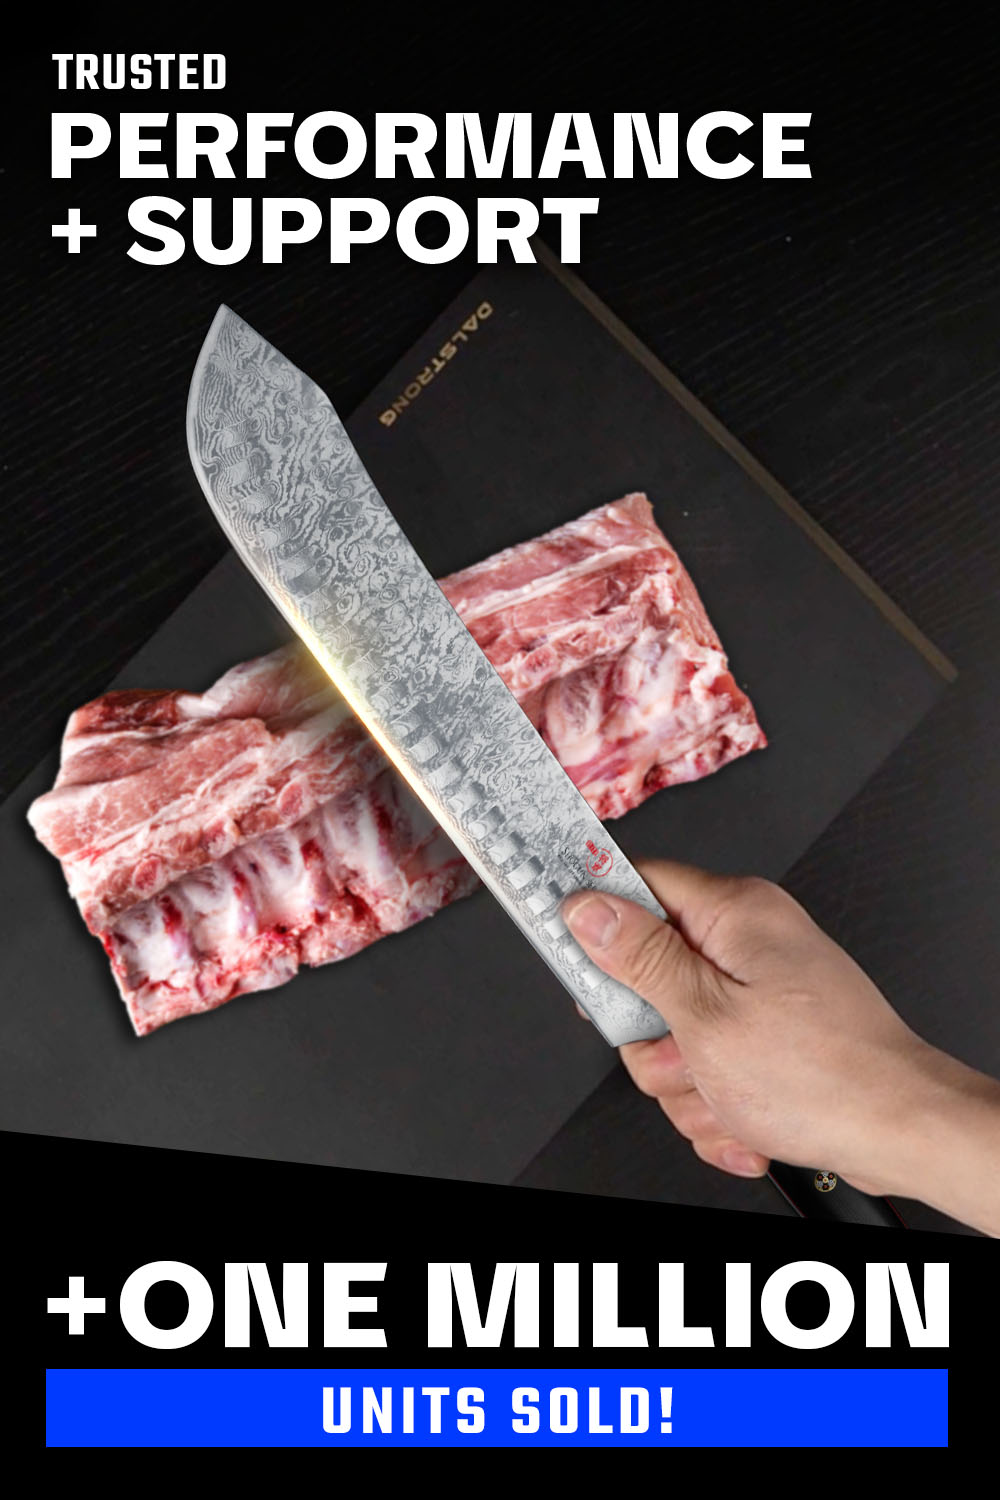 Bull Nose Butcher Knife 10" | Shogun Series ELITE | Dalstrong ©